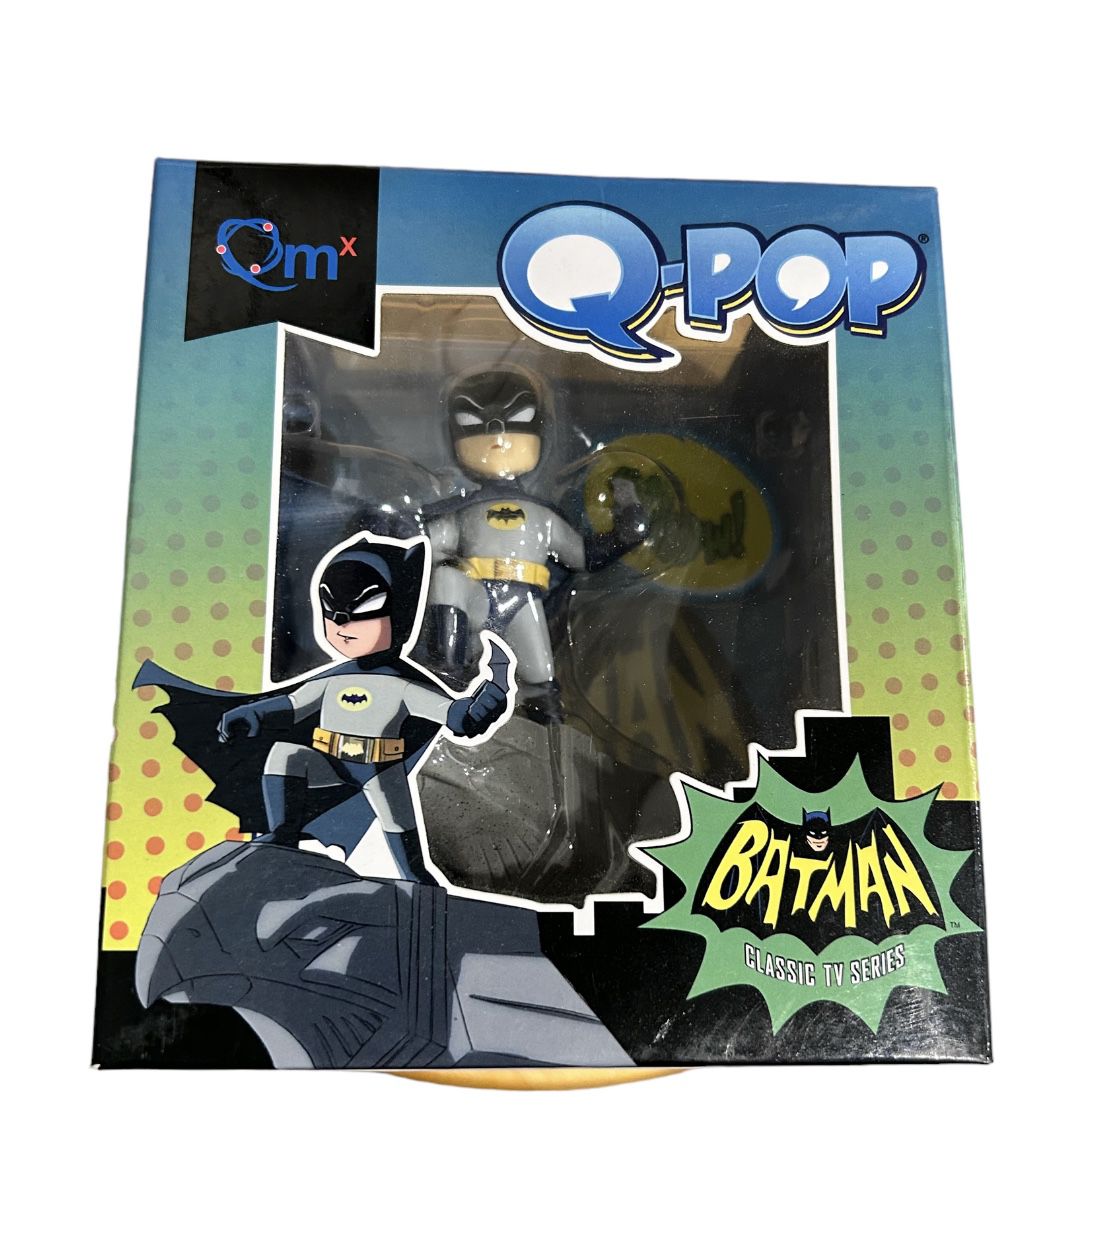 Q-POP Classic Batman Figure (New)